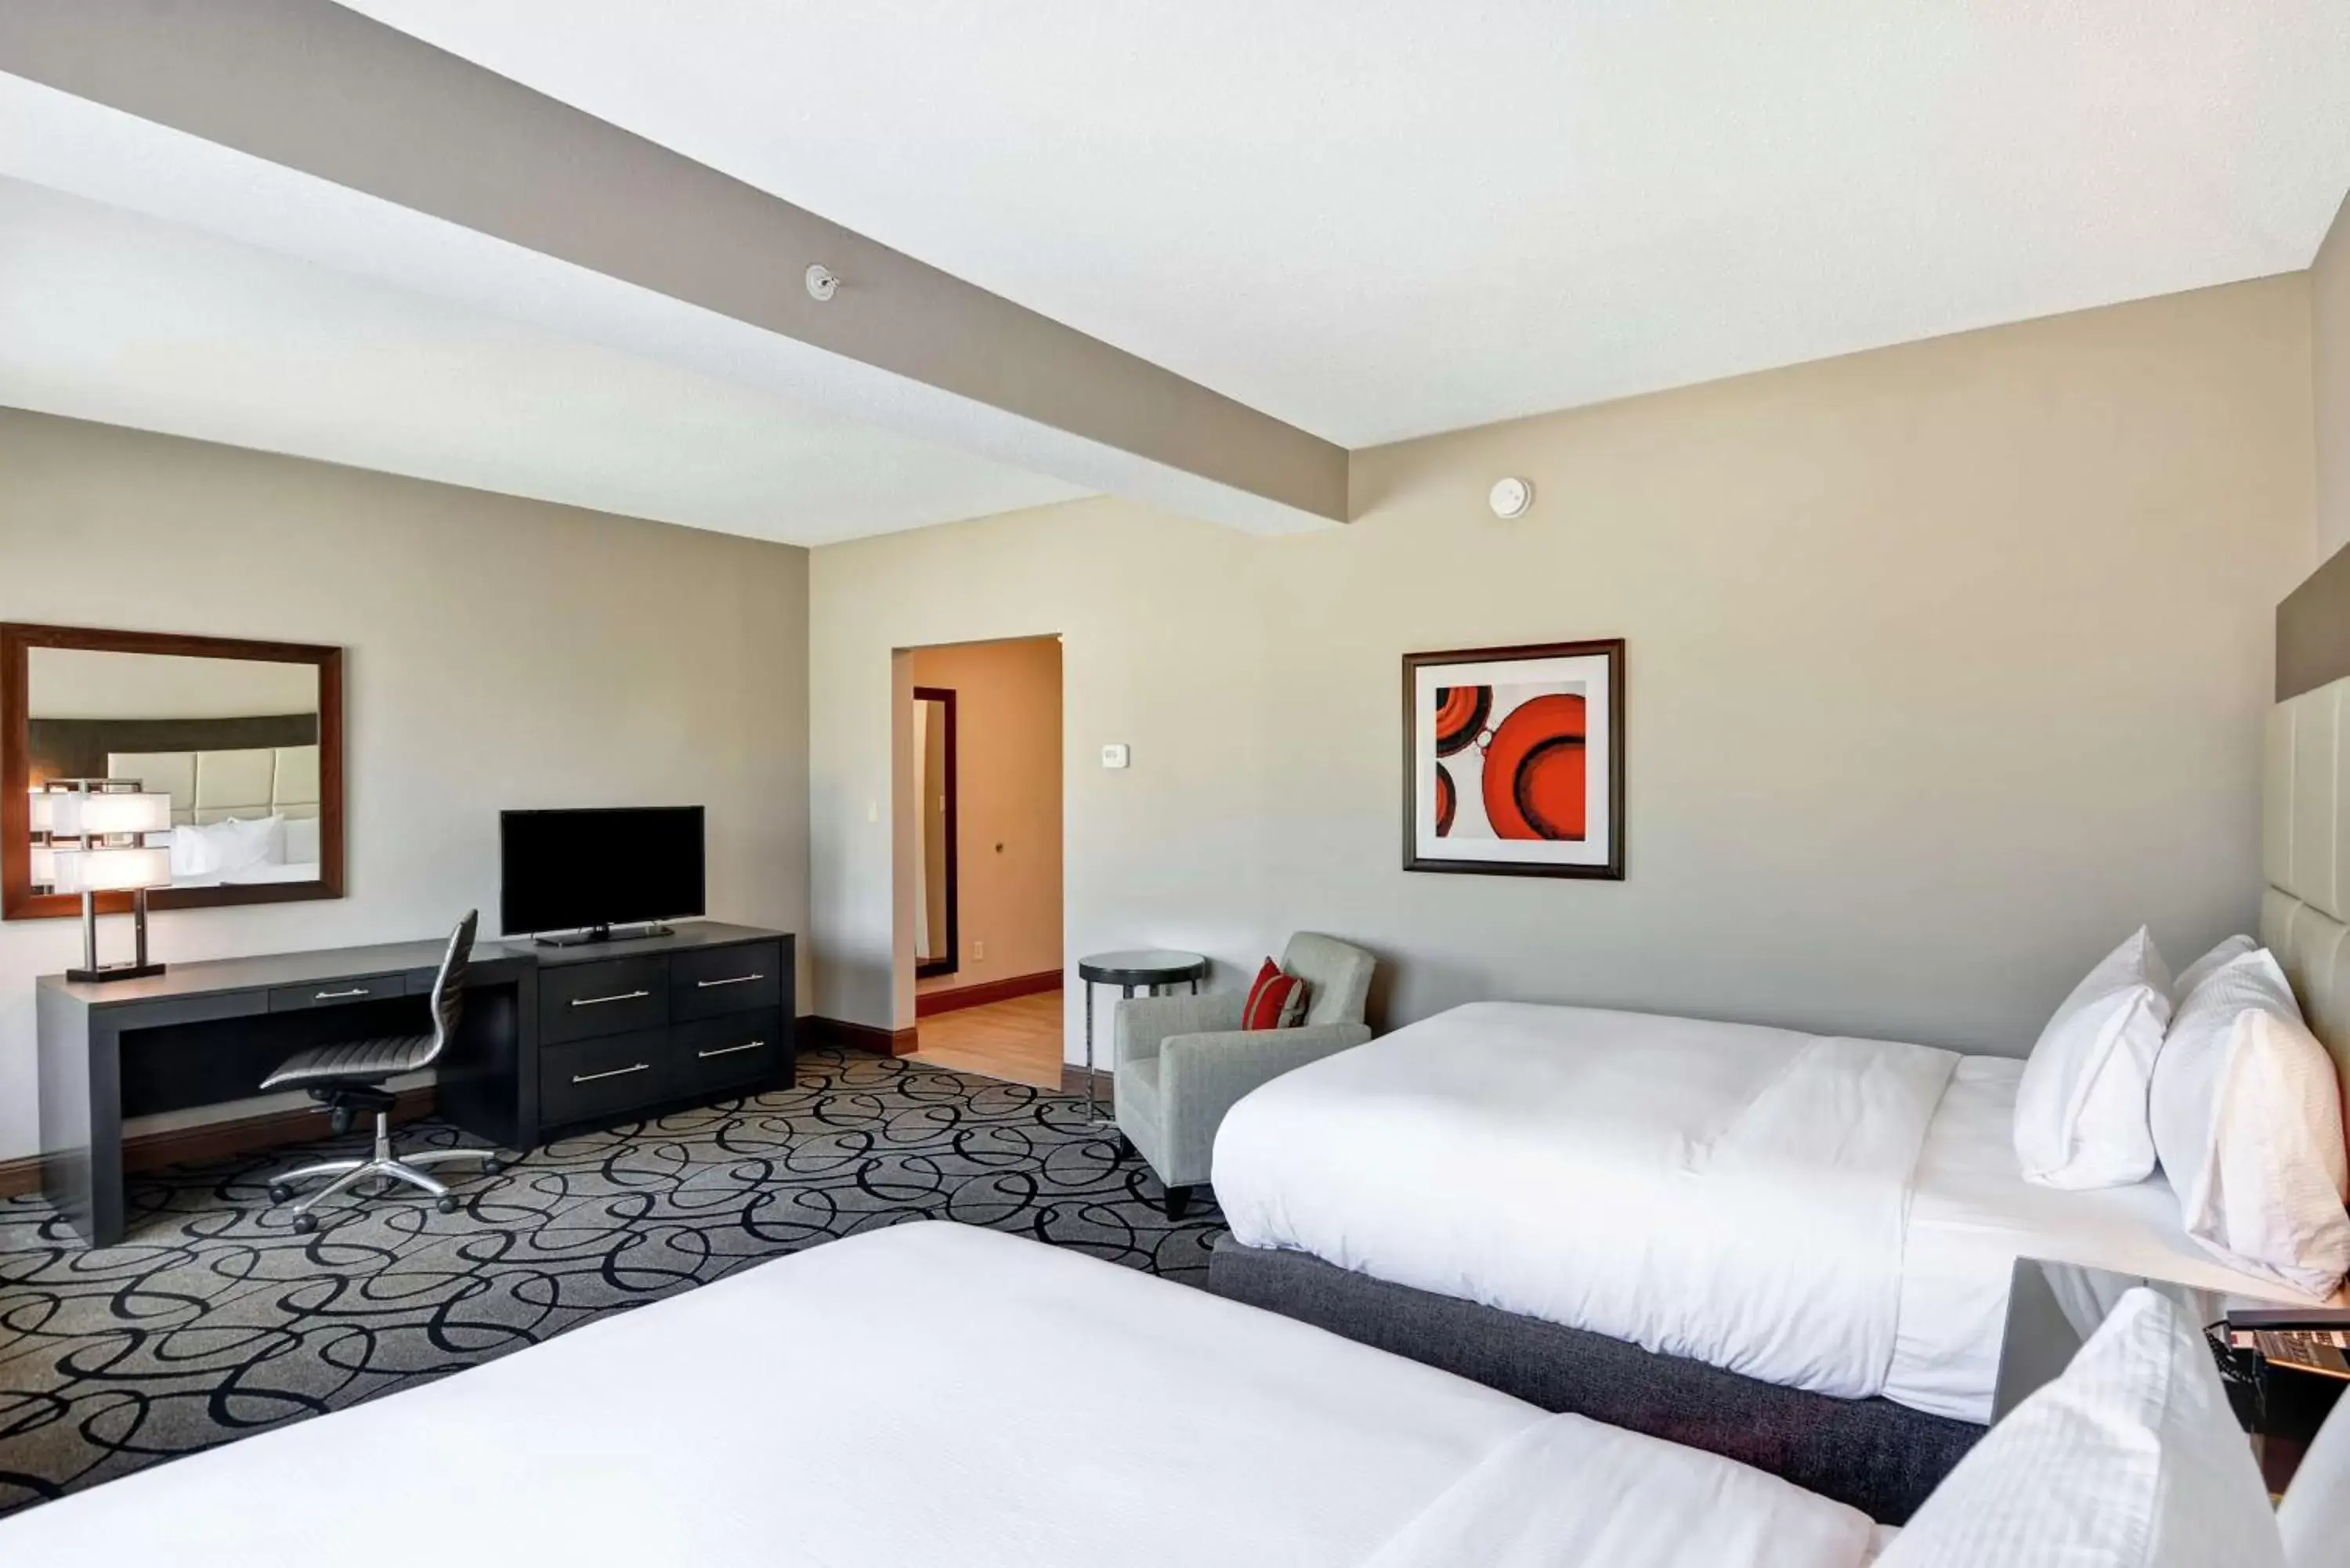 Bedroom, Bed in DoubleTree by Hilton Hattiesburg, MS